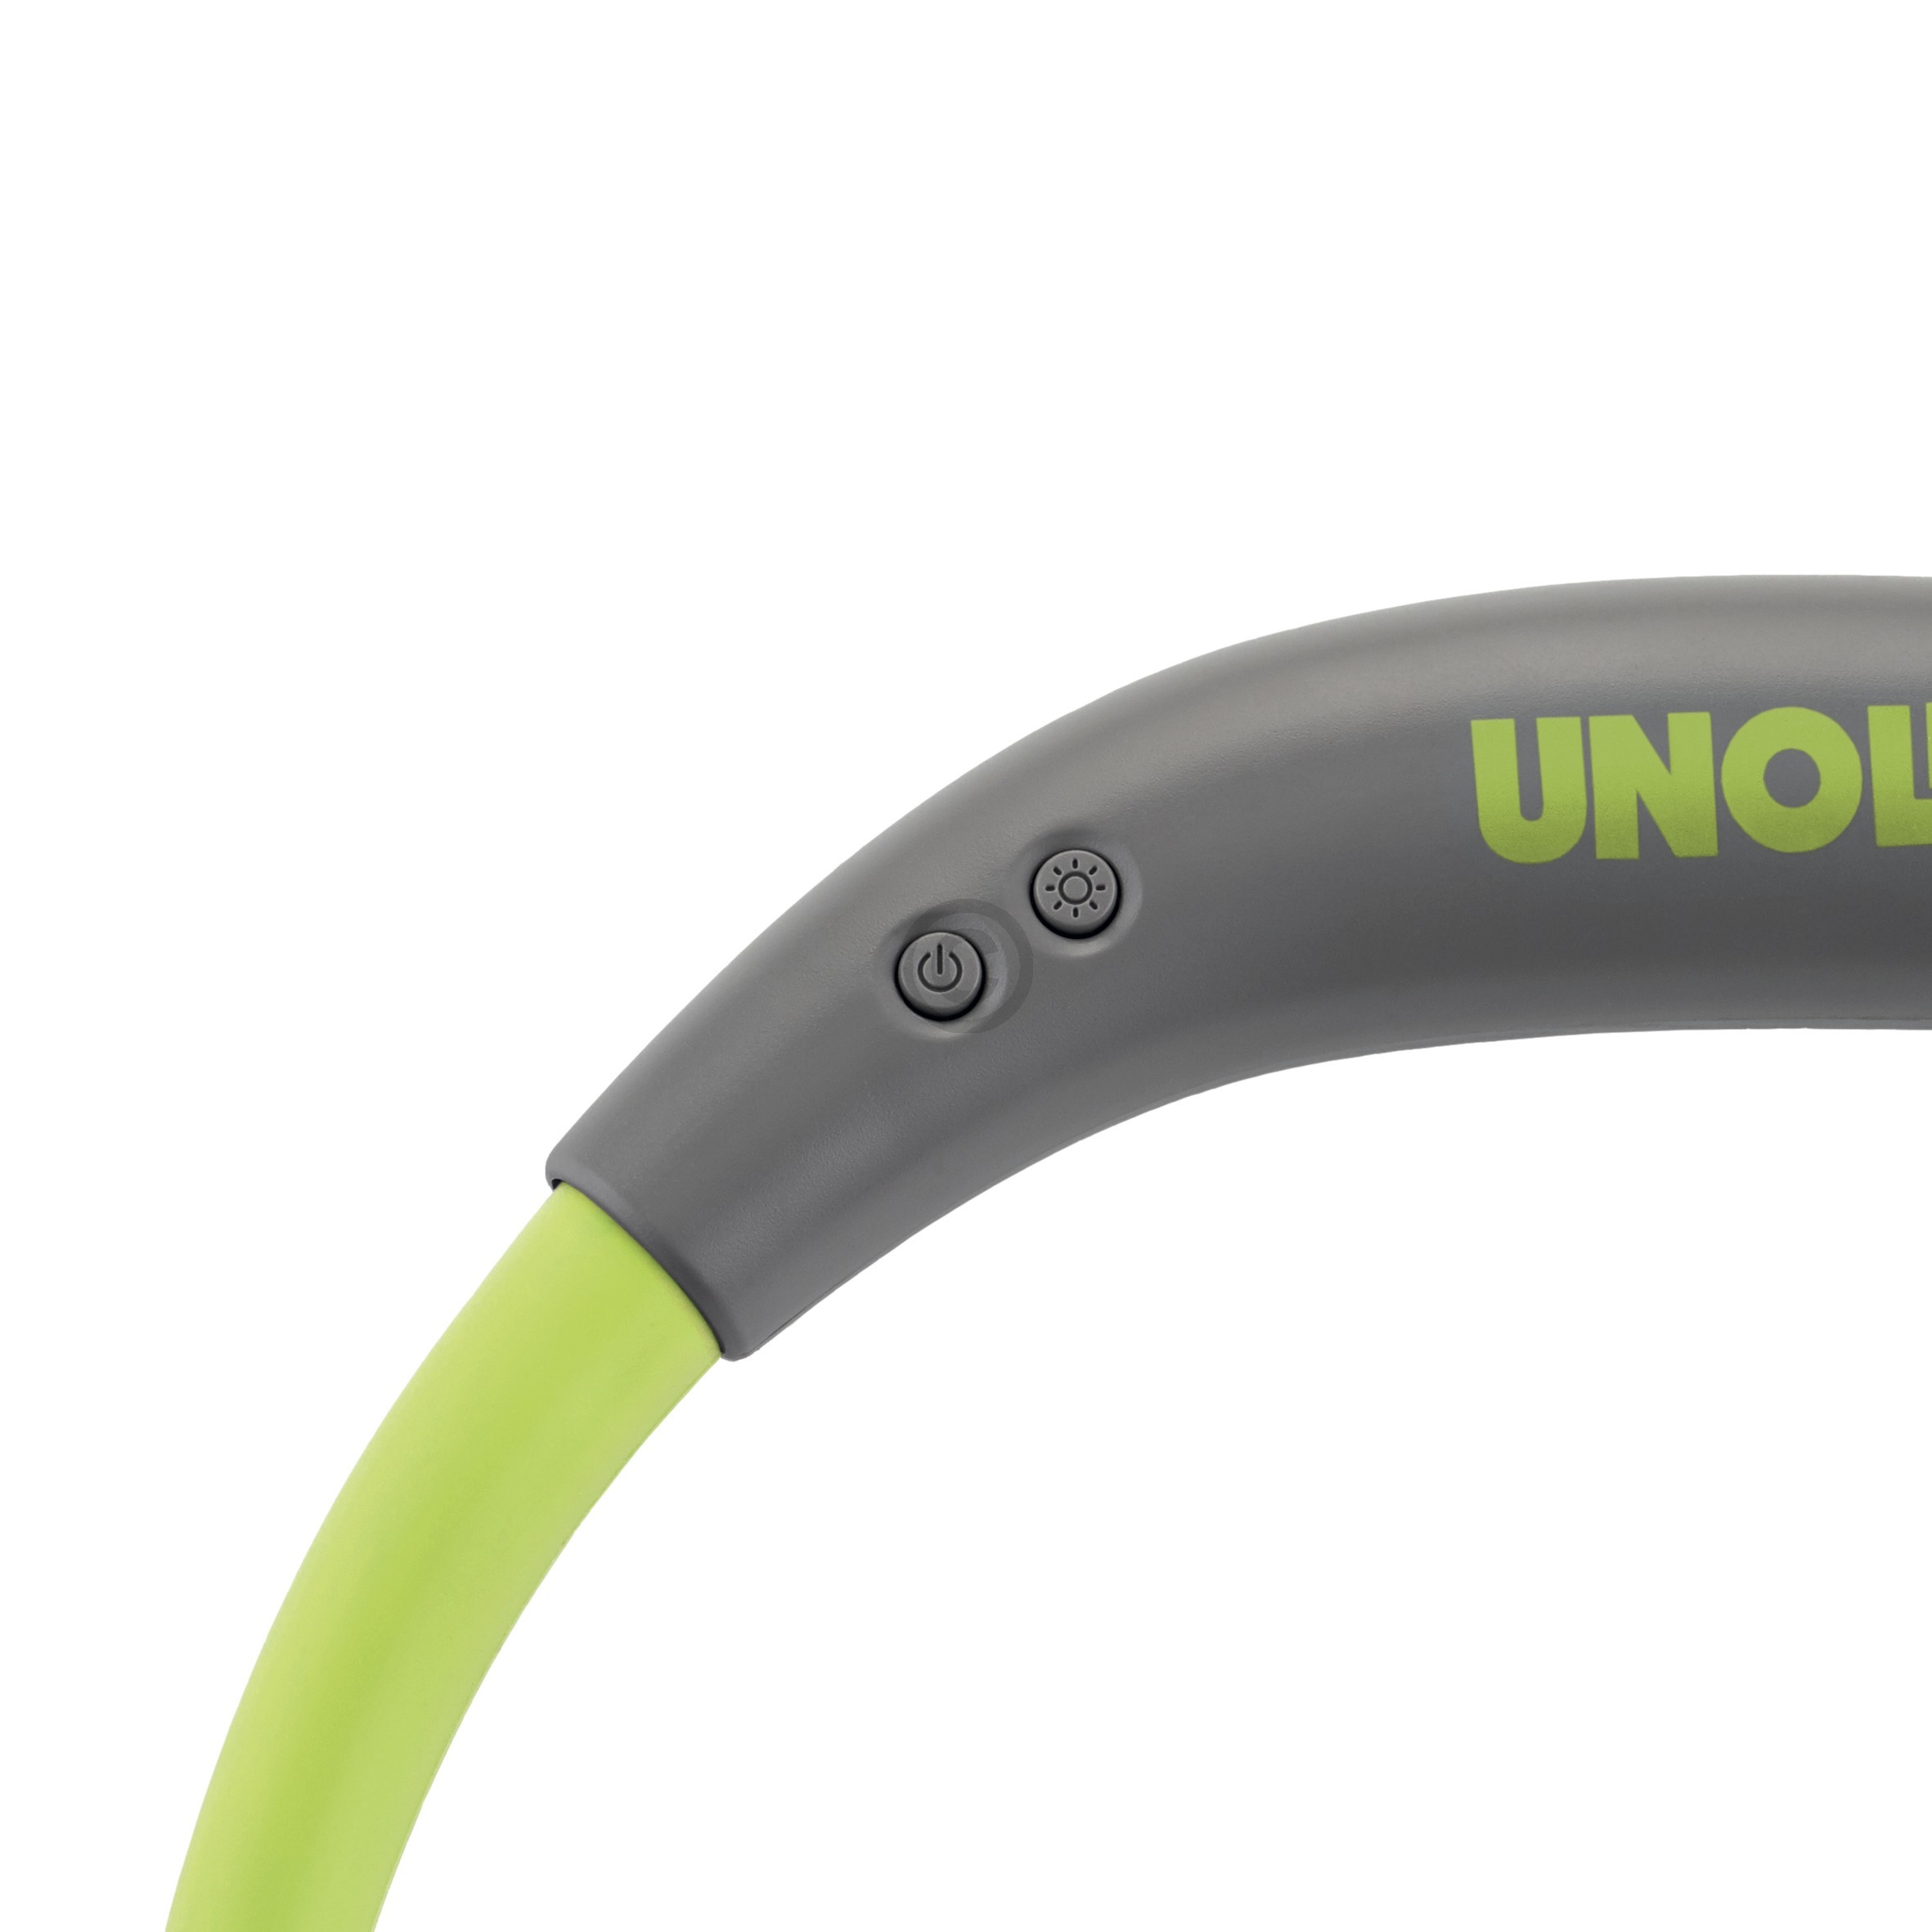 Nackenventilator UNOLD 86696 Breezy green mit Akku USB-Ladekabel